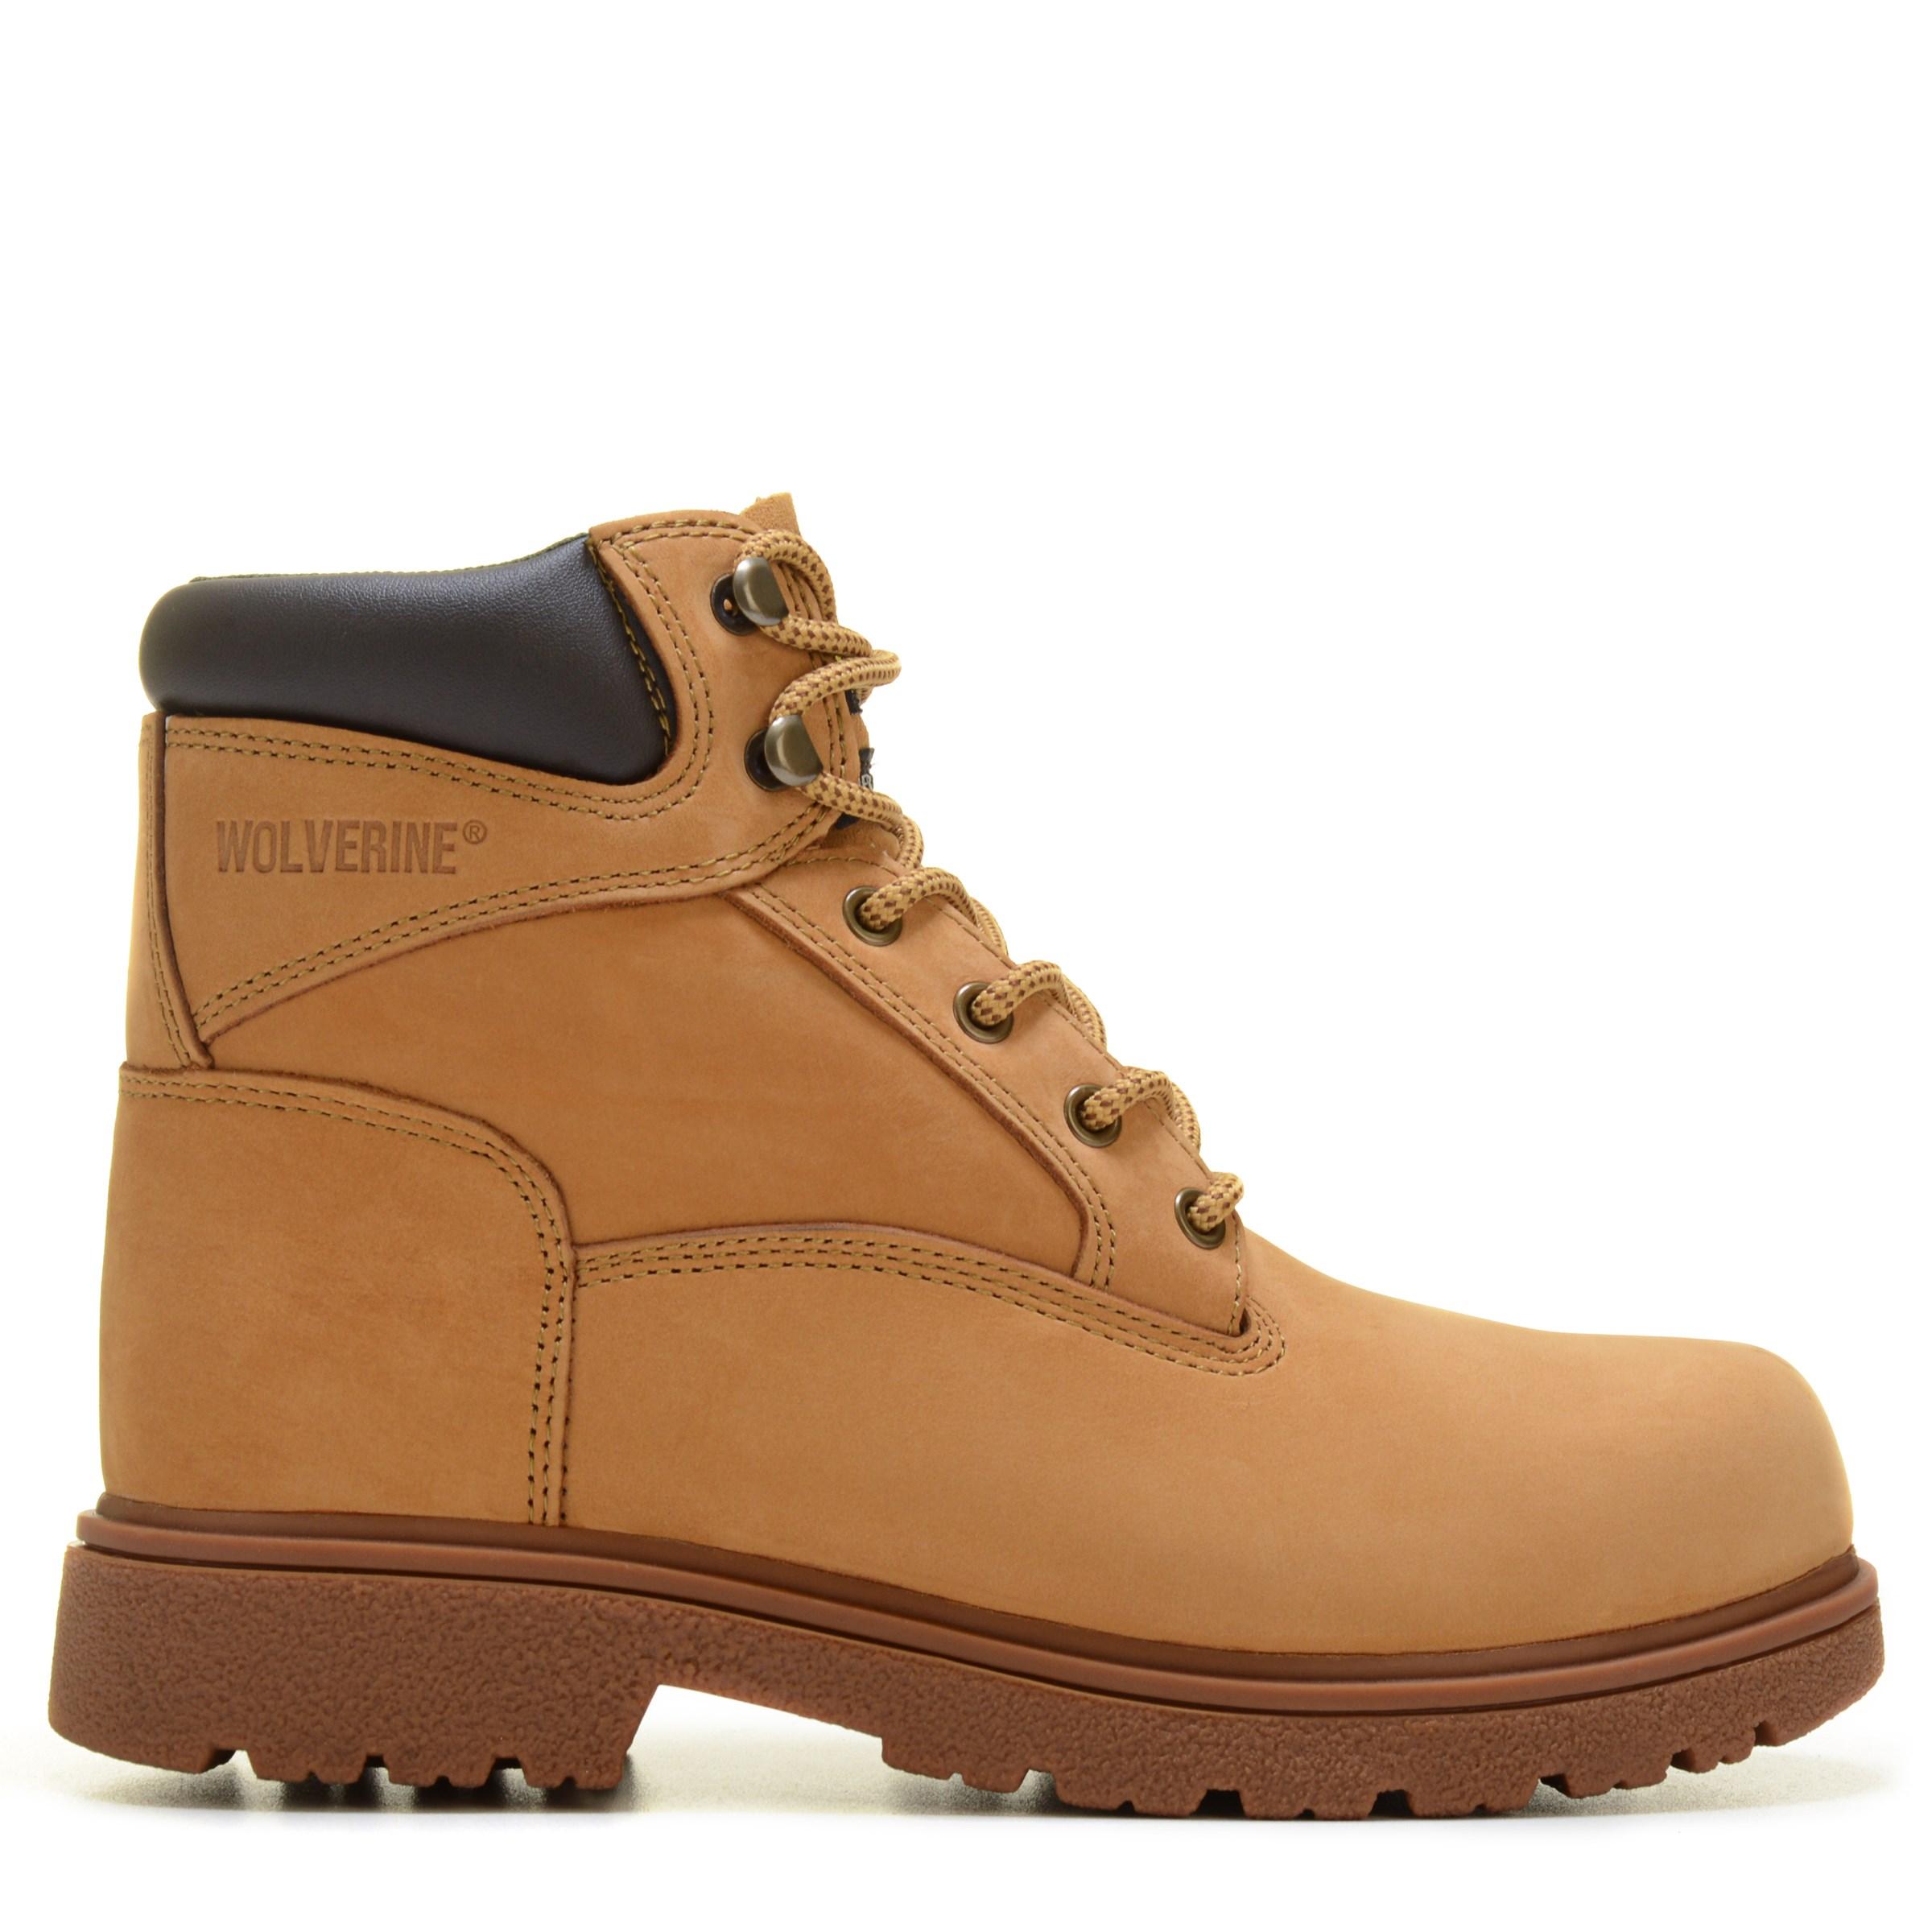 wolverine boots slip resistant